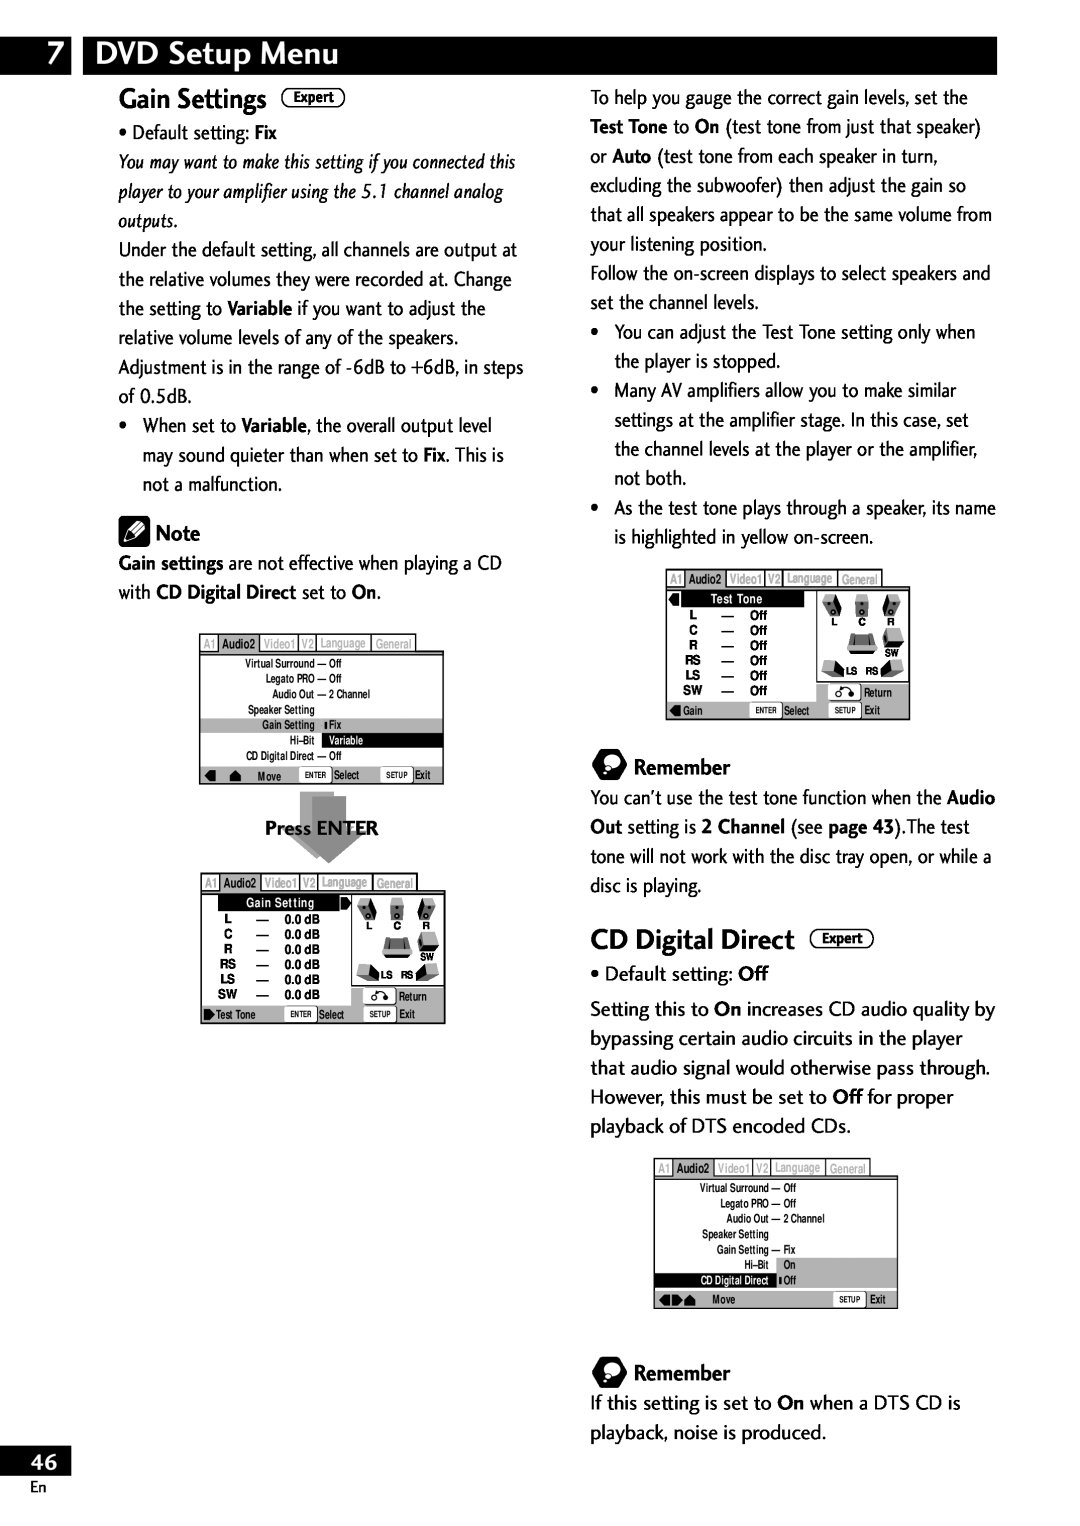 Pioneer DV-S733A operating instructions Gain Settings, CD Digital Direct, DVD Setup Menu, Remember 